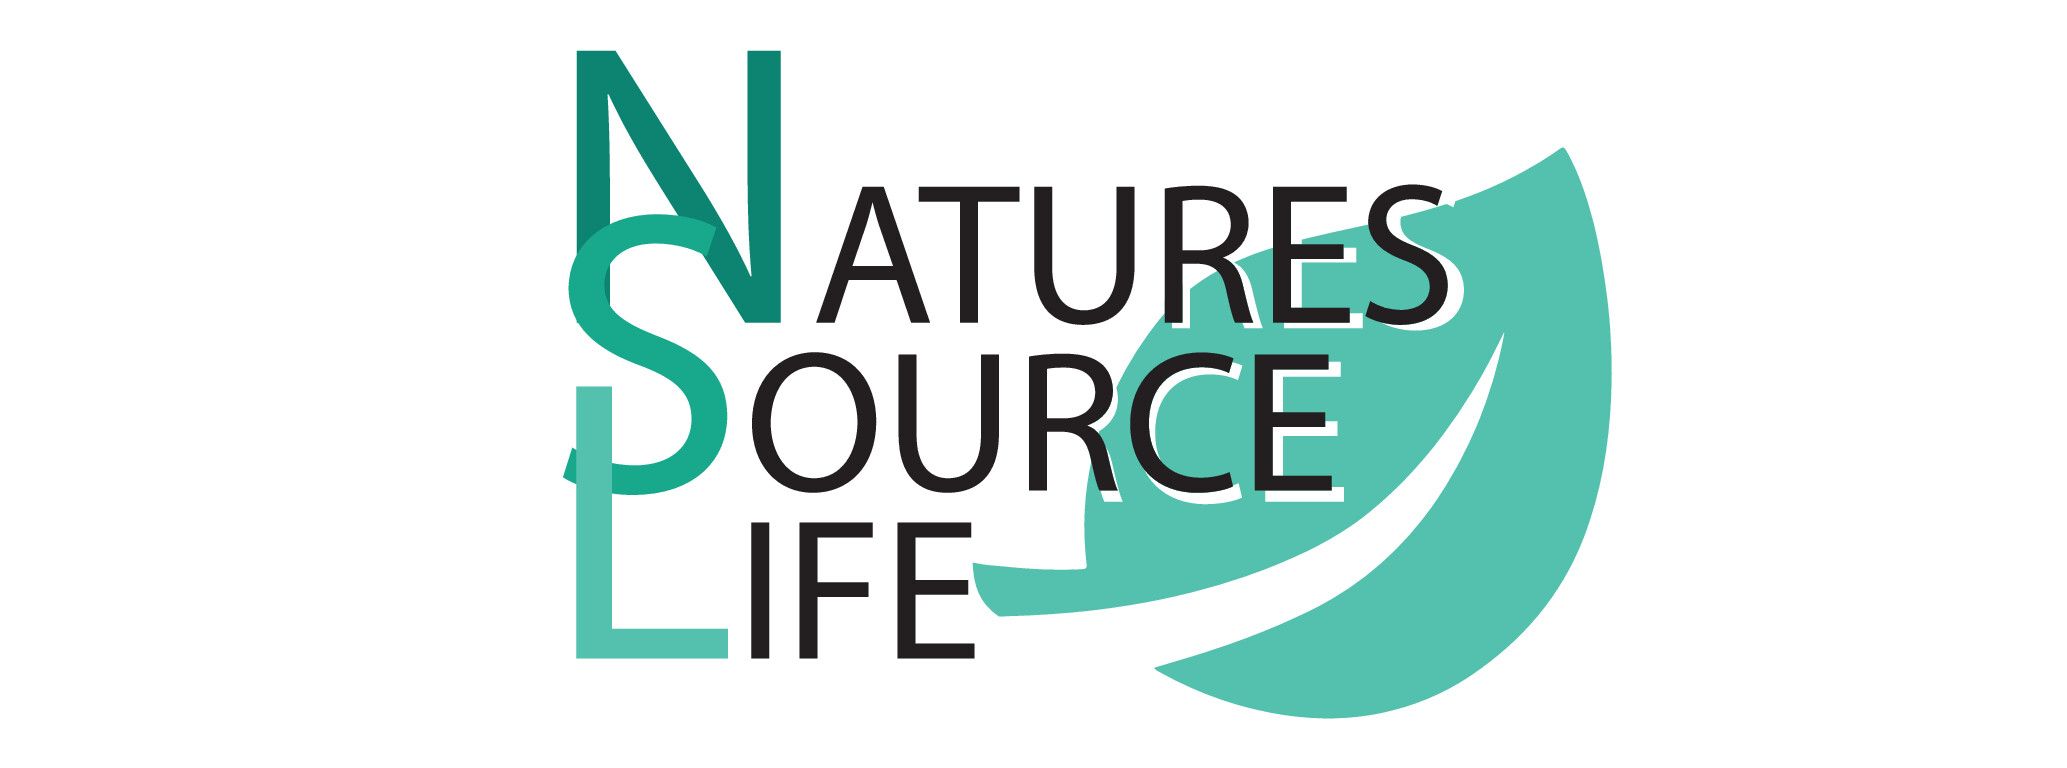 Natures source life